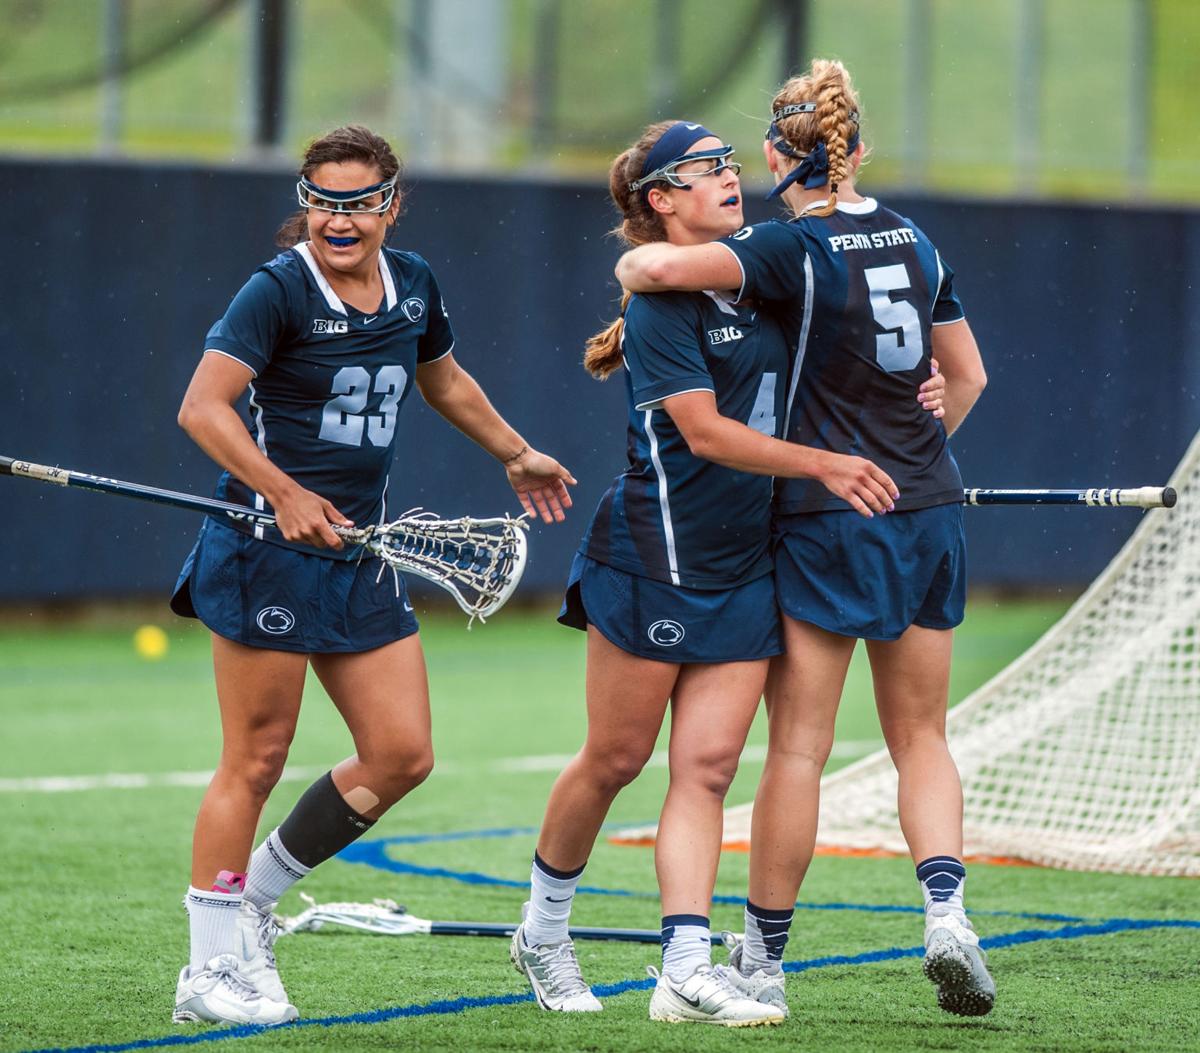 Penn State women's lacrosse ranked No. 5 in preseason poll | Penn State Women's Lacrosse News